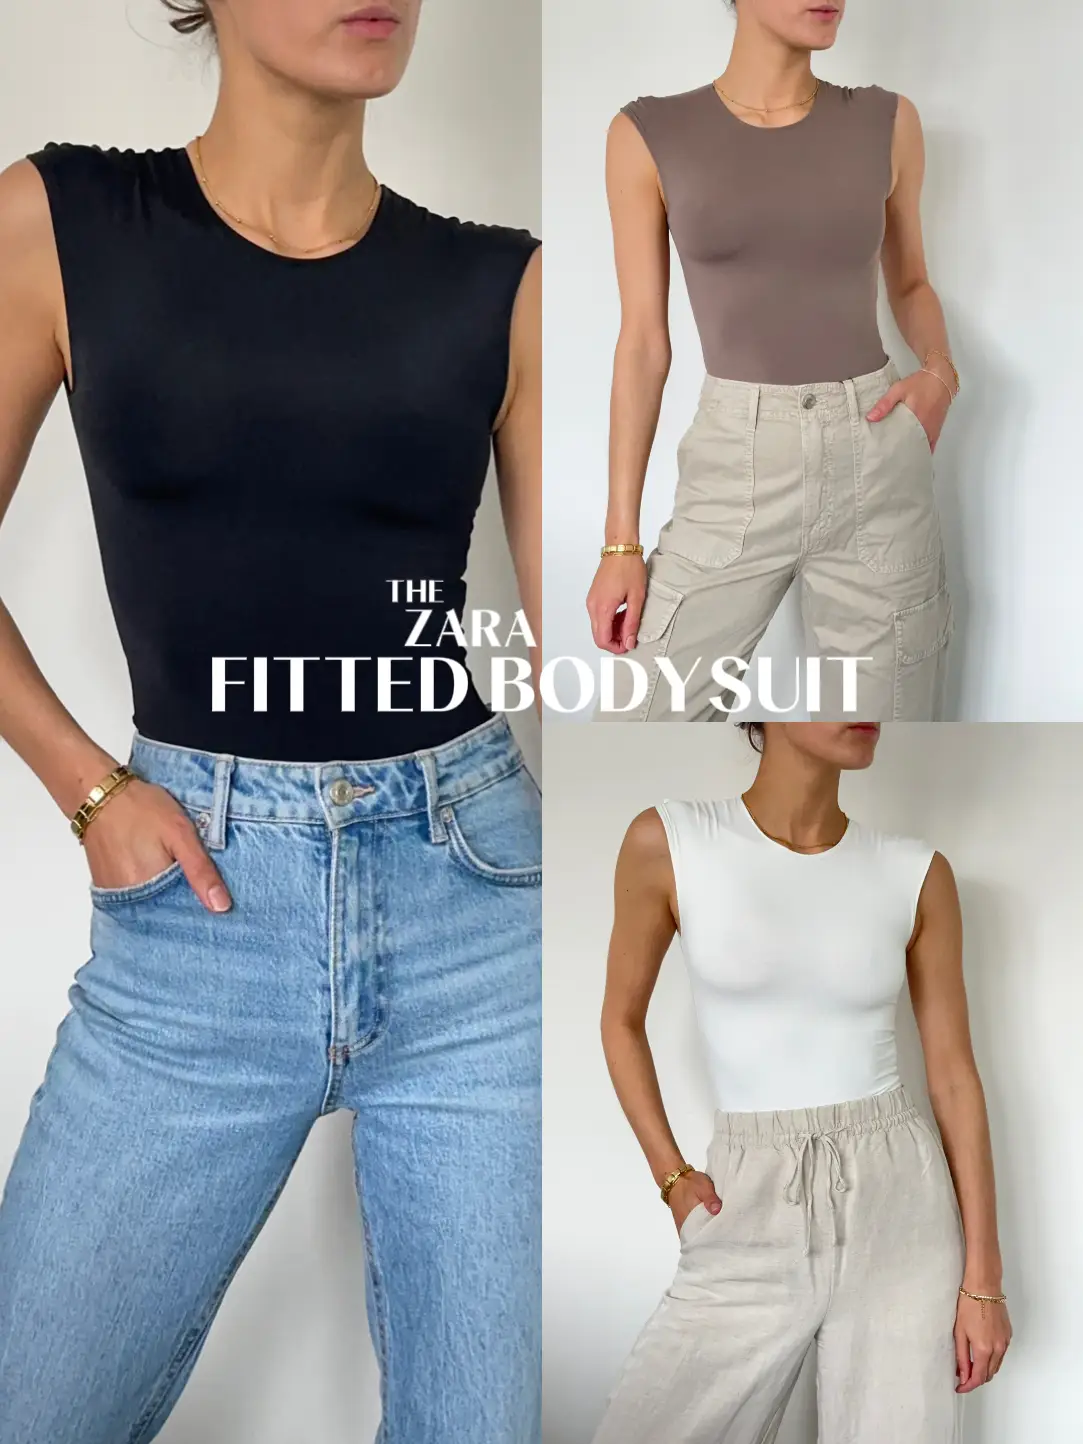 Perfect fitting Zara bodysuit 🤍  Gallery posted by ambermaylowe